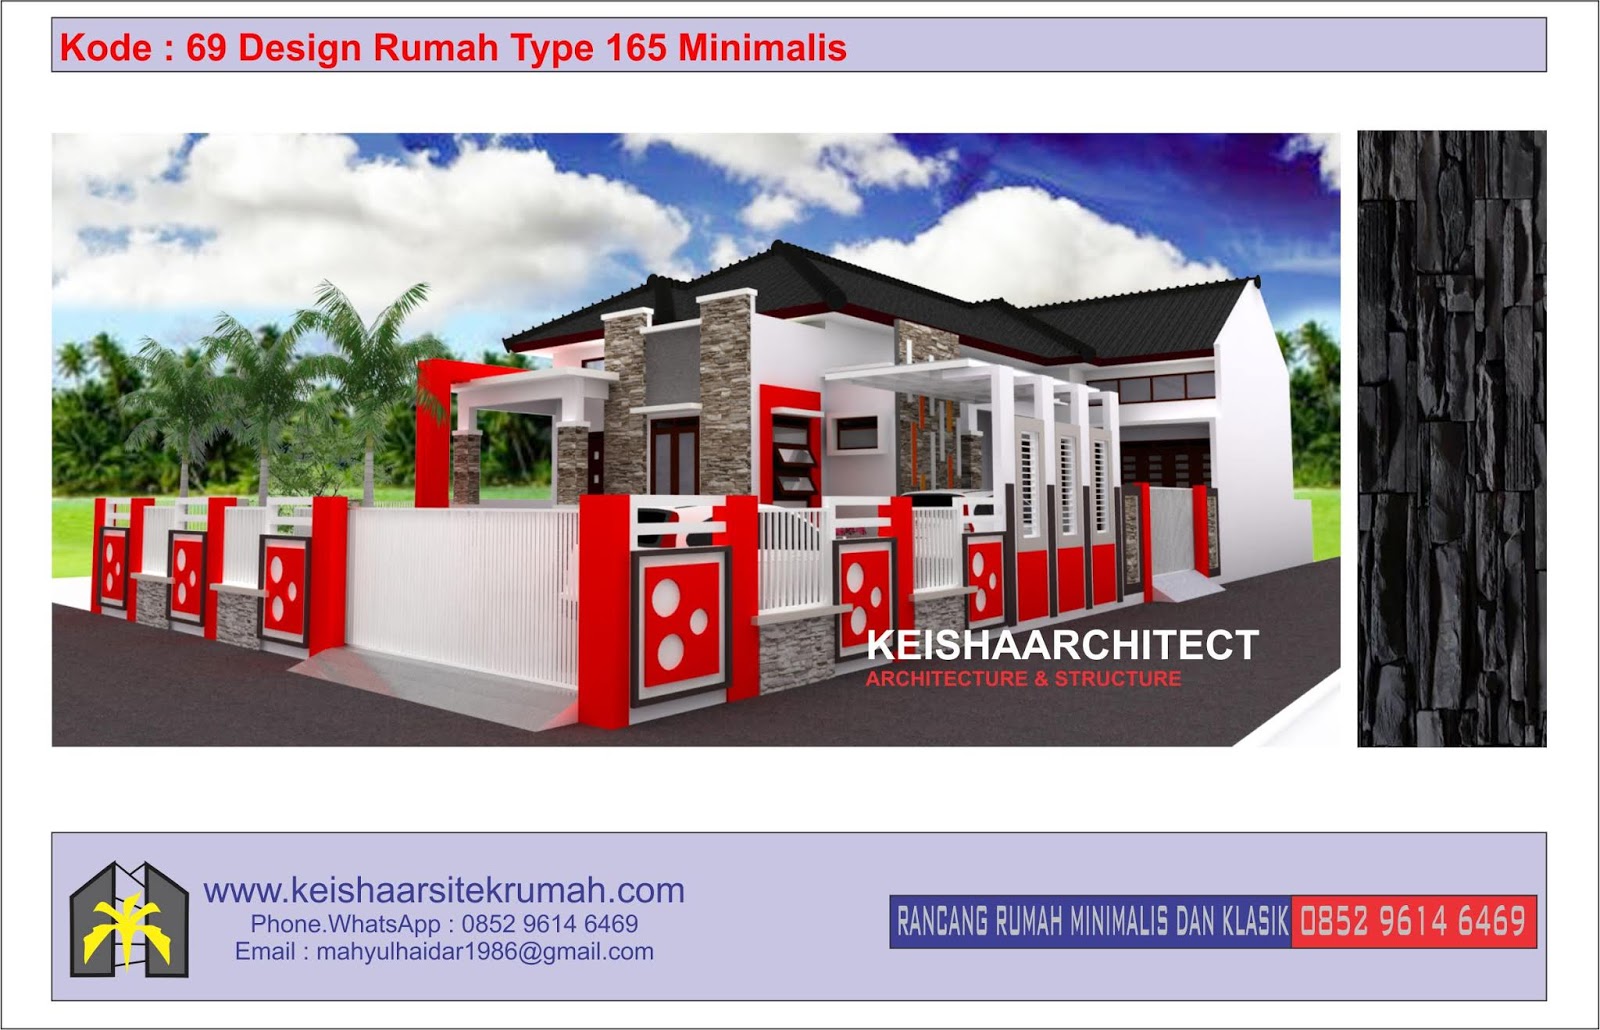 Kode 69 Design Rumah Type 165 Lokasi Bekasi Cikarang Jawa